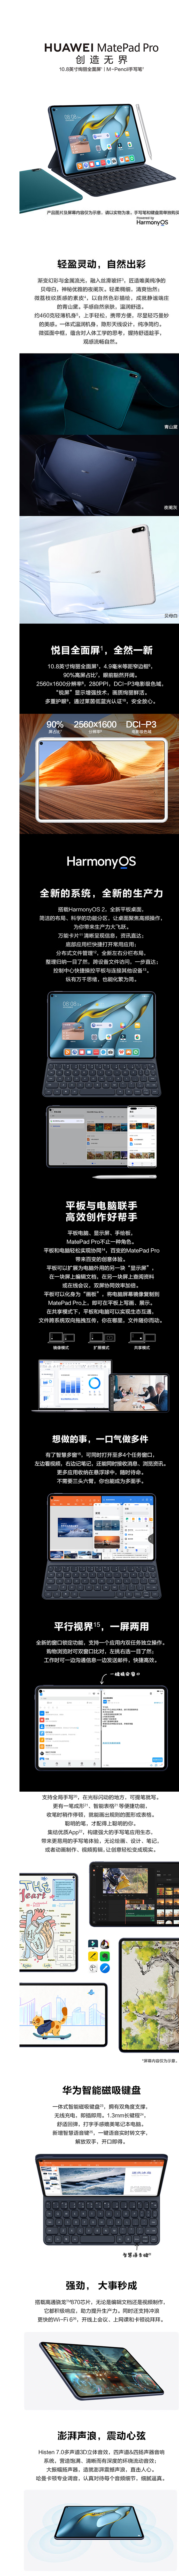 FireShot Capture 267 - 【华为HUAWEI MatePad Pro MRR-W29】华为HUAWEI MatePad Pro MRR-W29 10.8英寸2021_ - item.jd.com.png